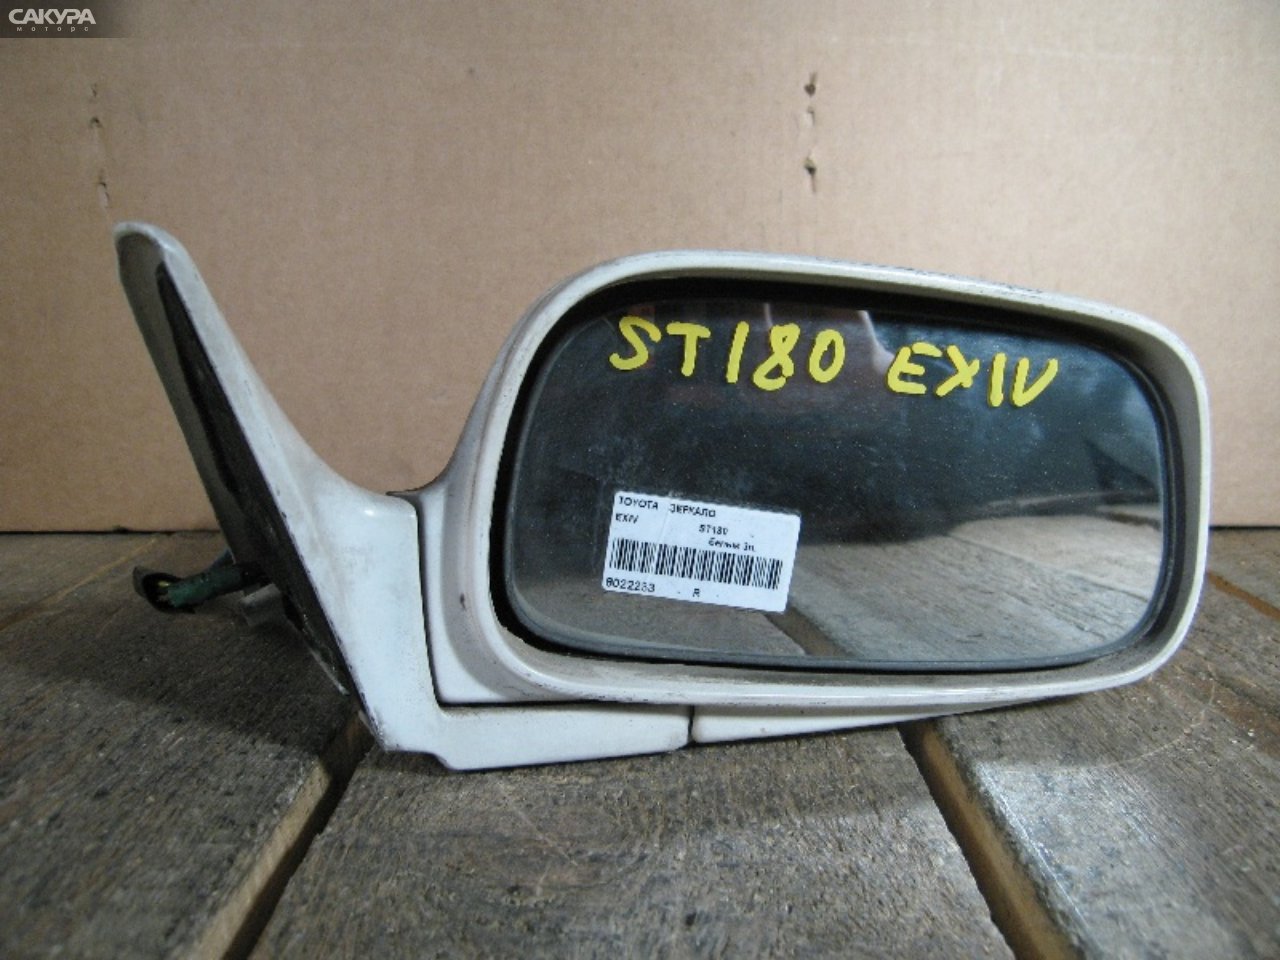 Зеркало боковое правое Toyota Corona Exiv ST180: купить в Сакура Абакан.